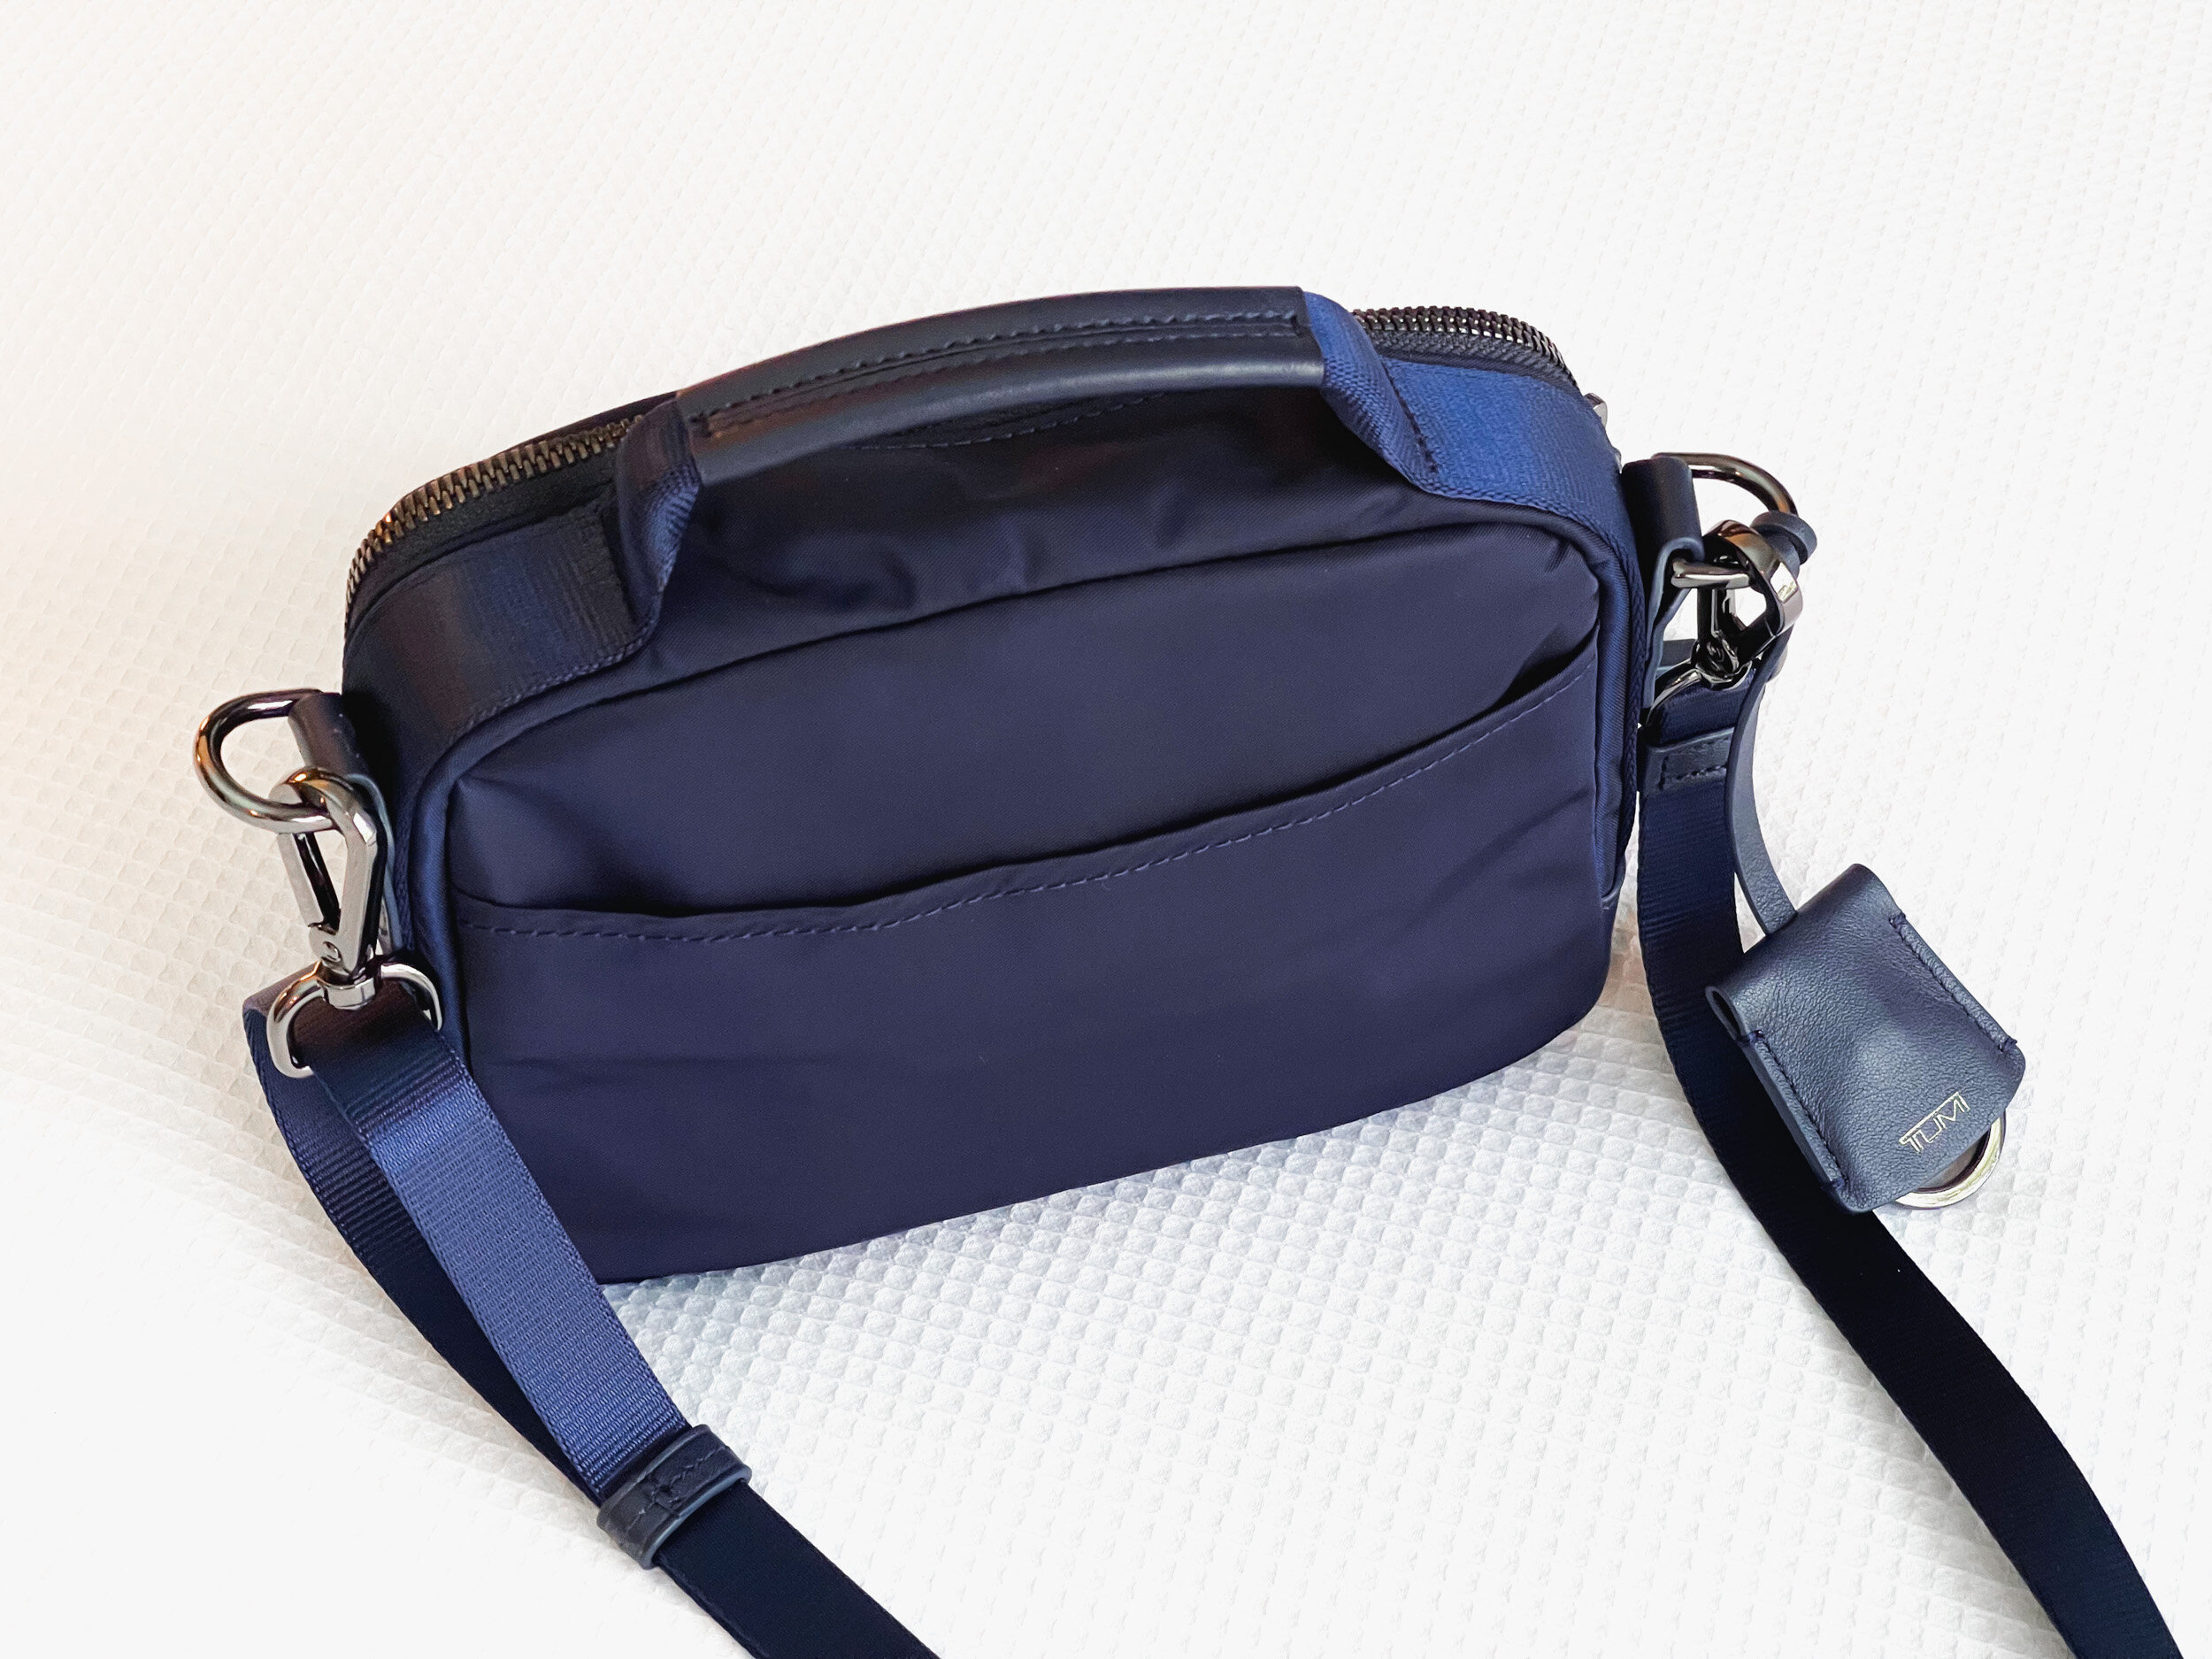 Tumi Voyageur Troy Crossbody Bag | The best small daily errands bag